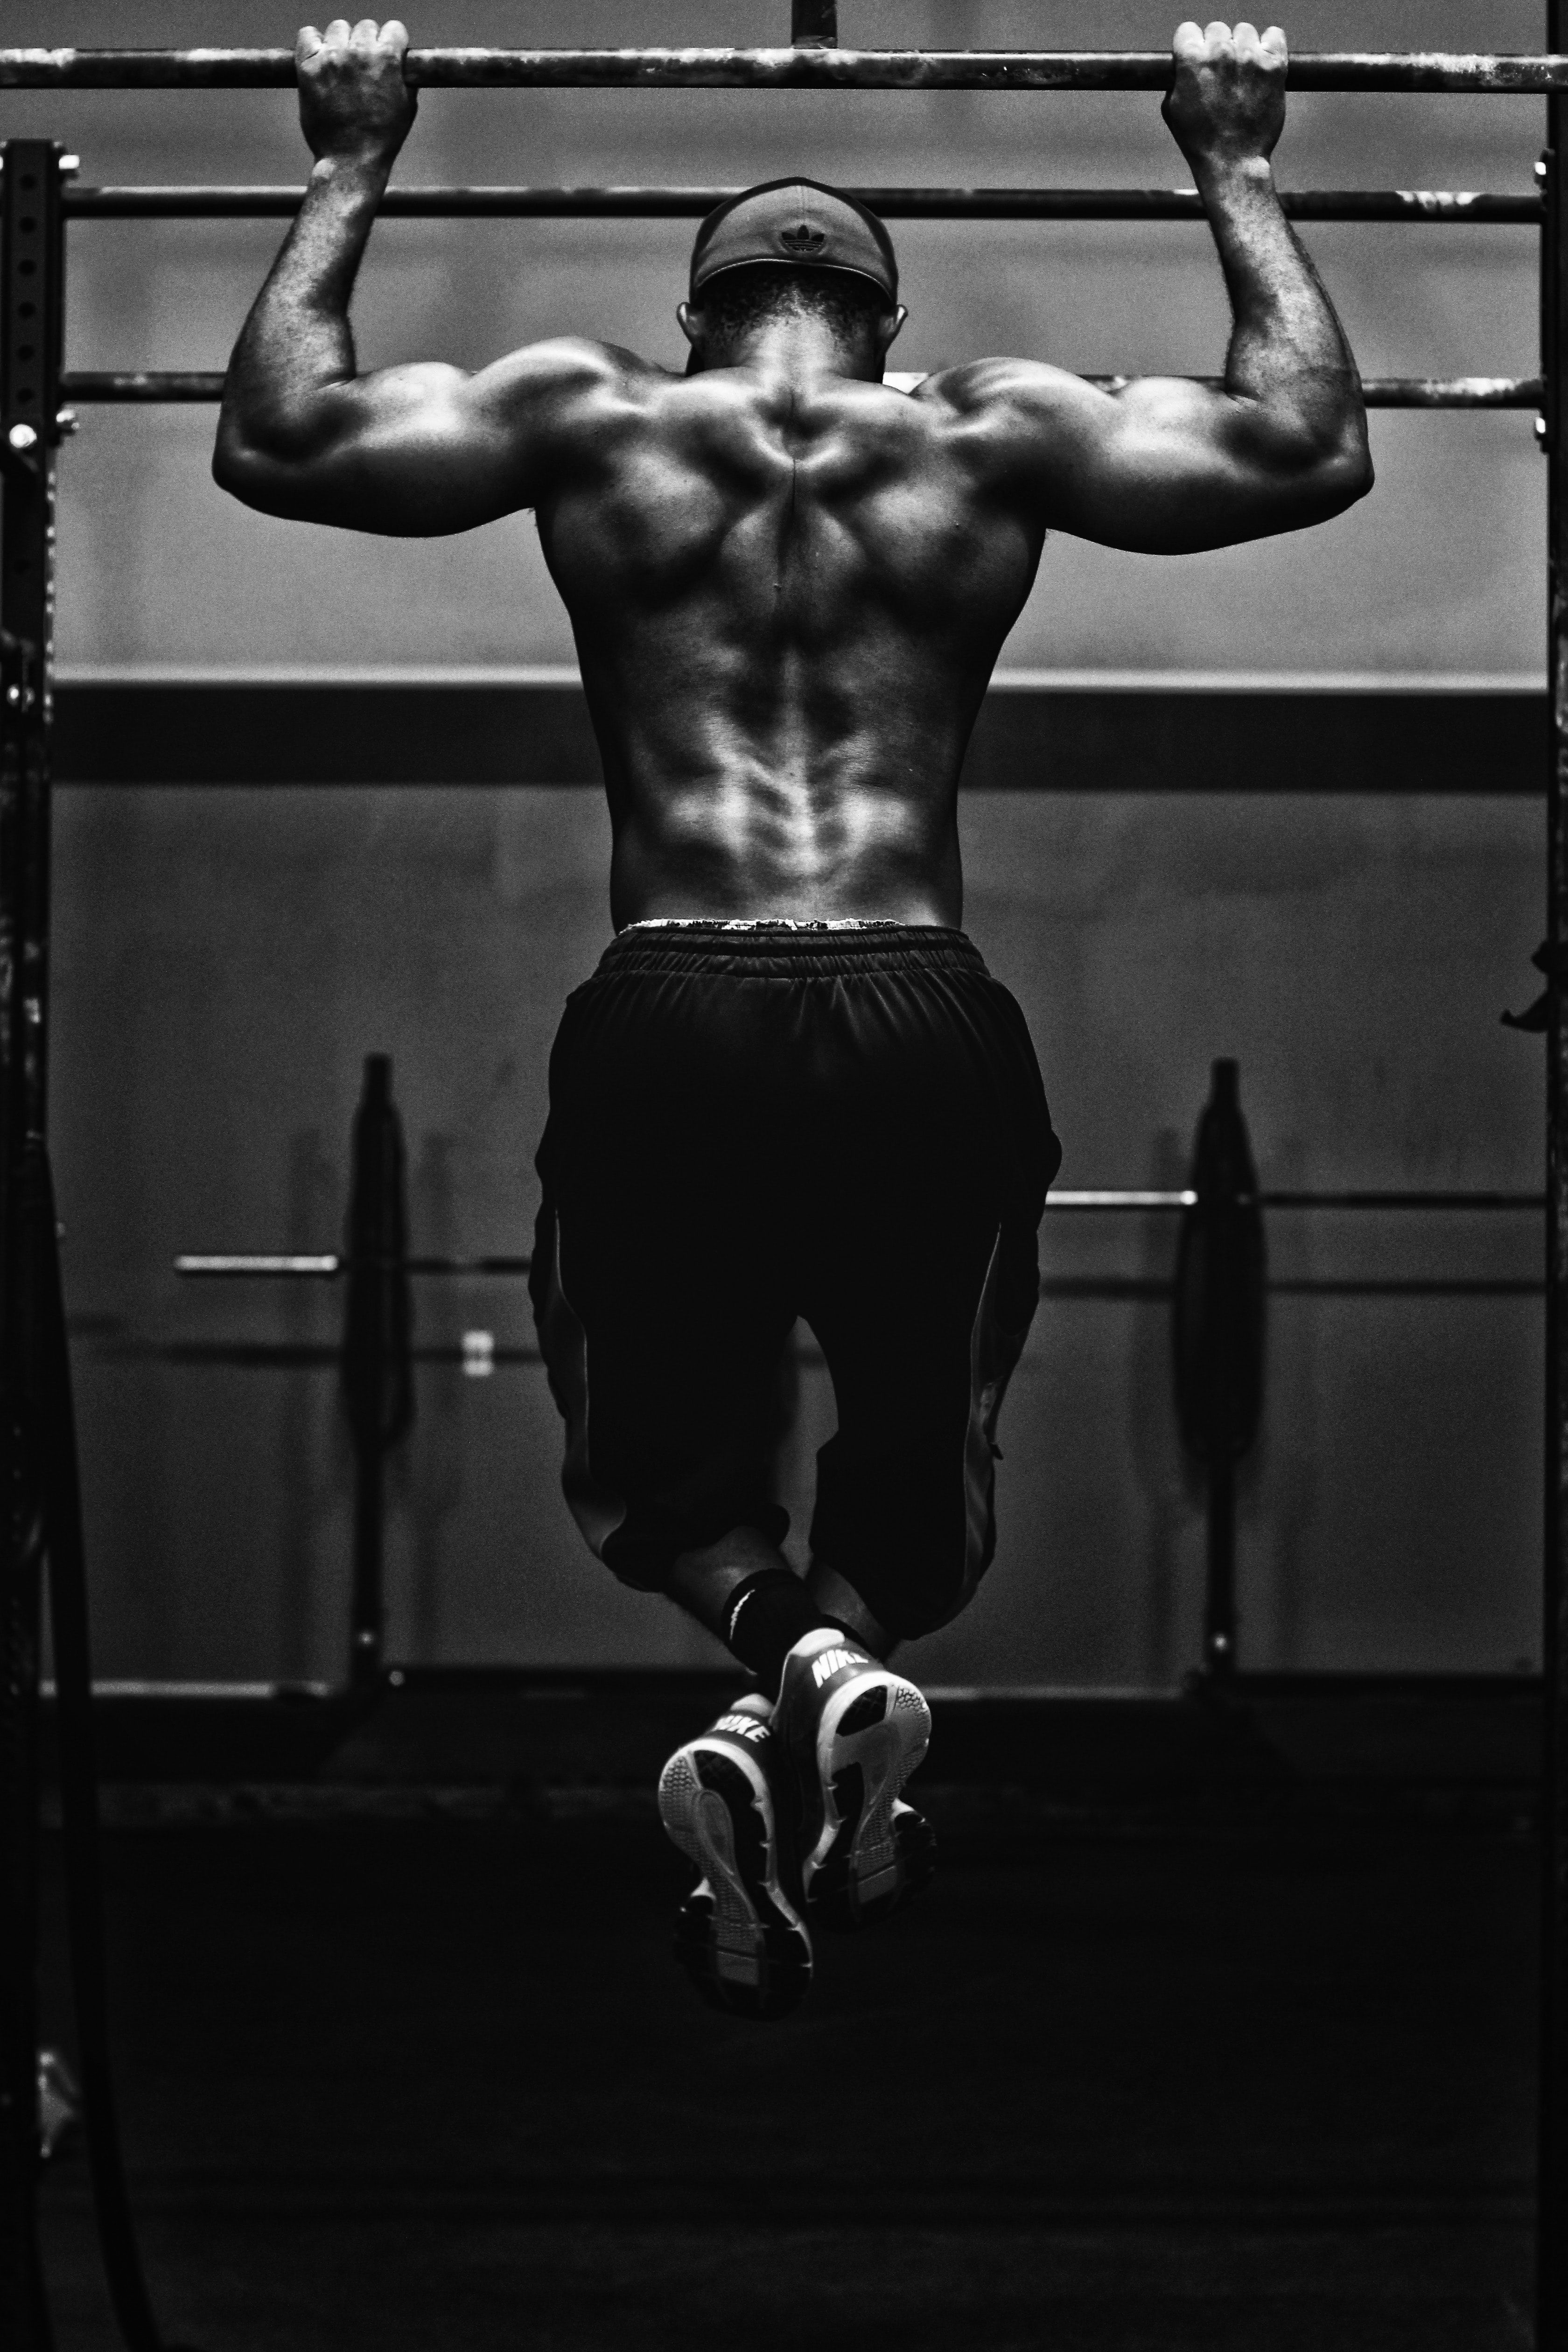 Bodybuilder Photo [HD]. Download Free Image